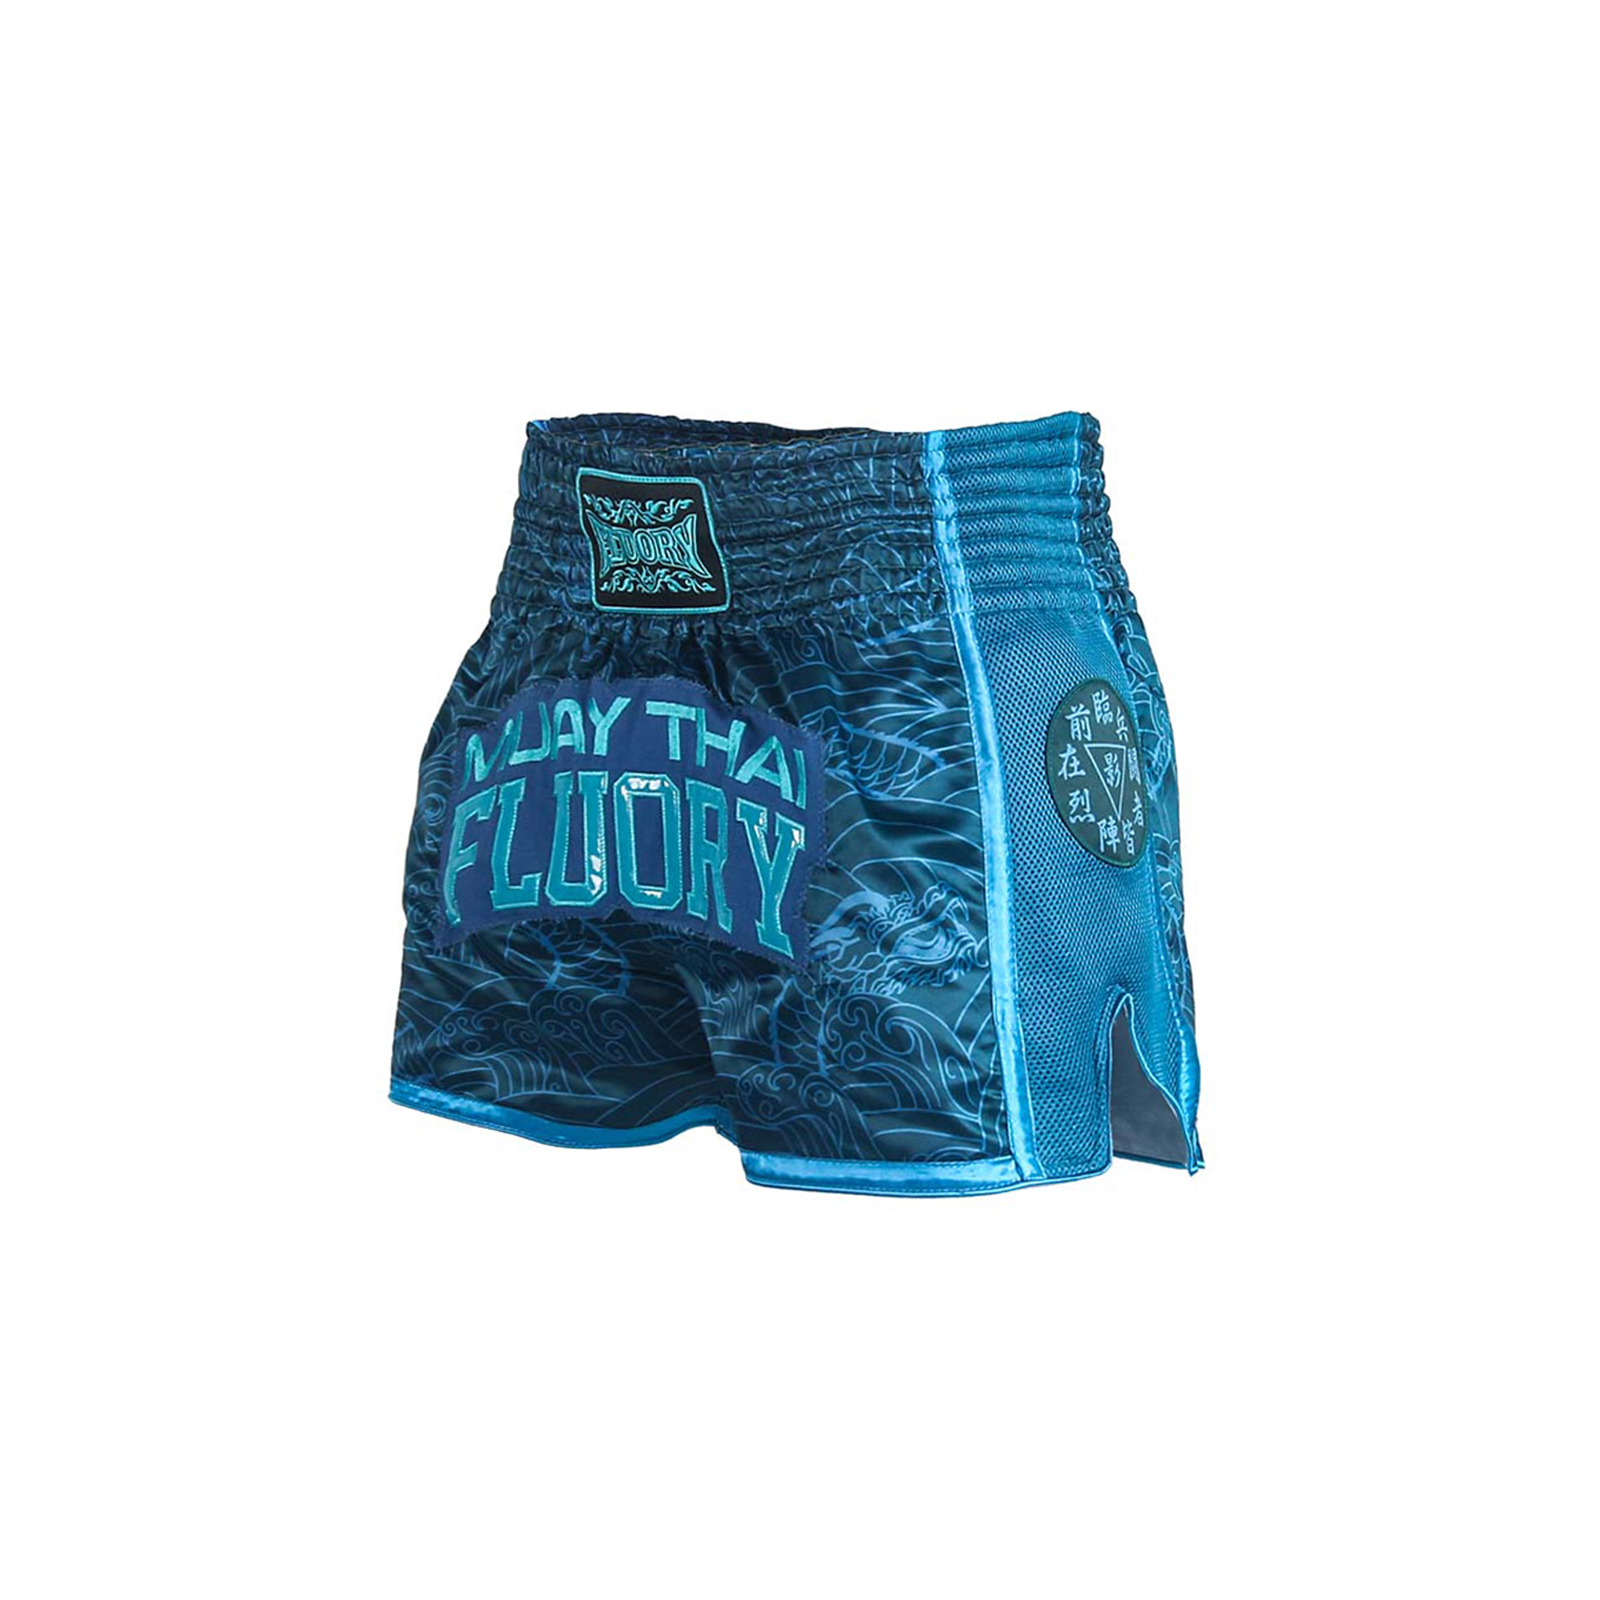 Tranemo Workwear 5910-92 Undergarments FR Boxer Shorts 